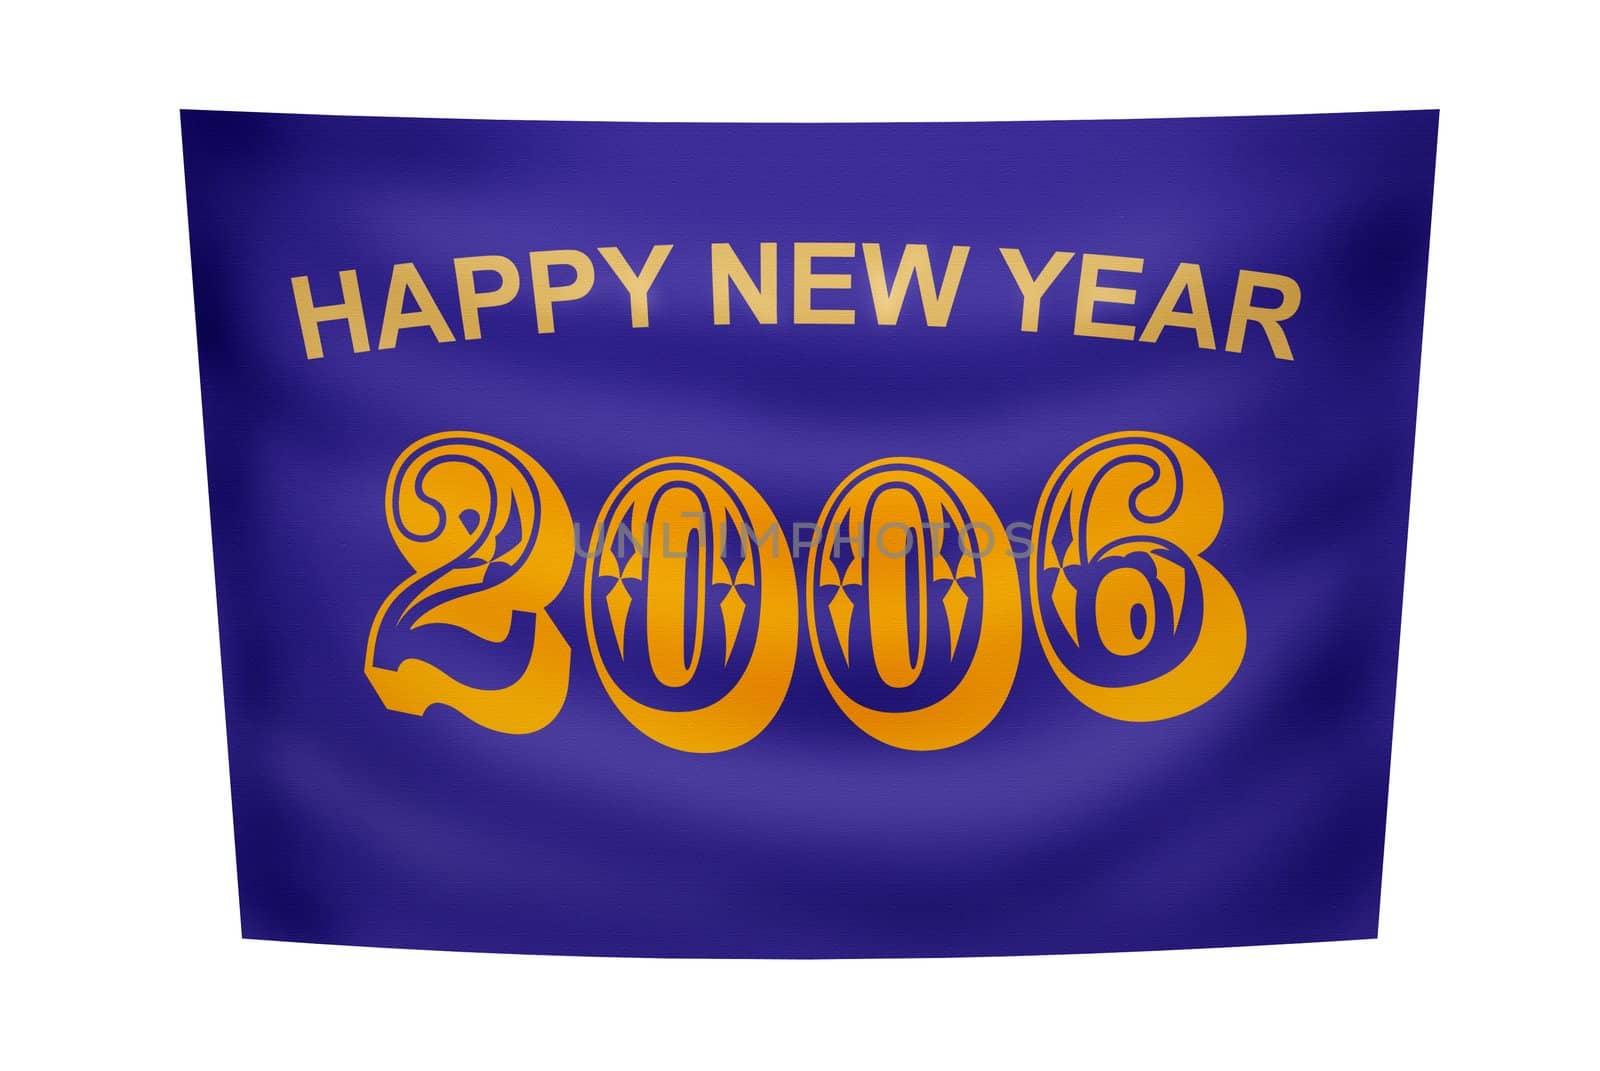 Happy New Year banner by Kuzma